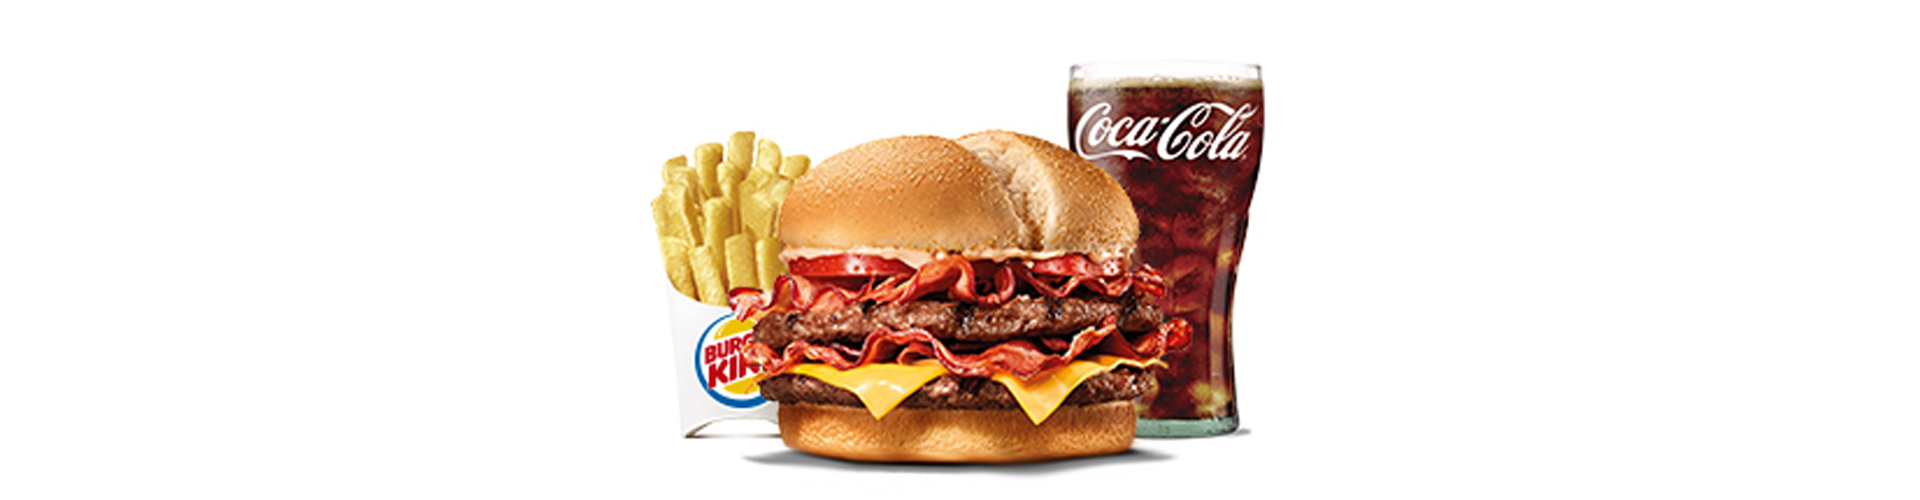 burgerking-40002212-limonada-ensalada